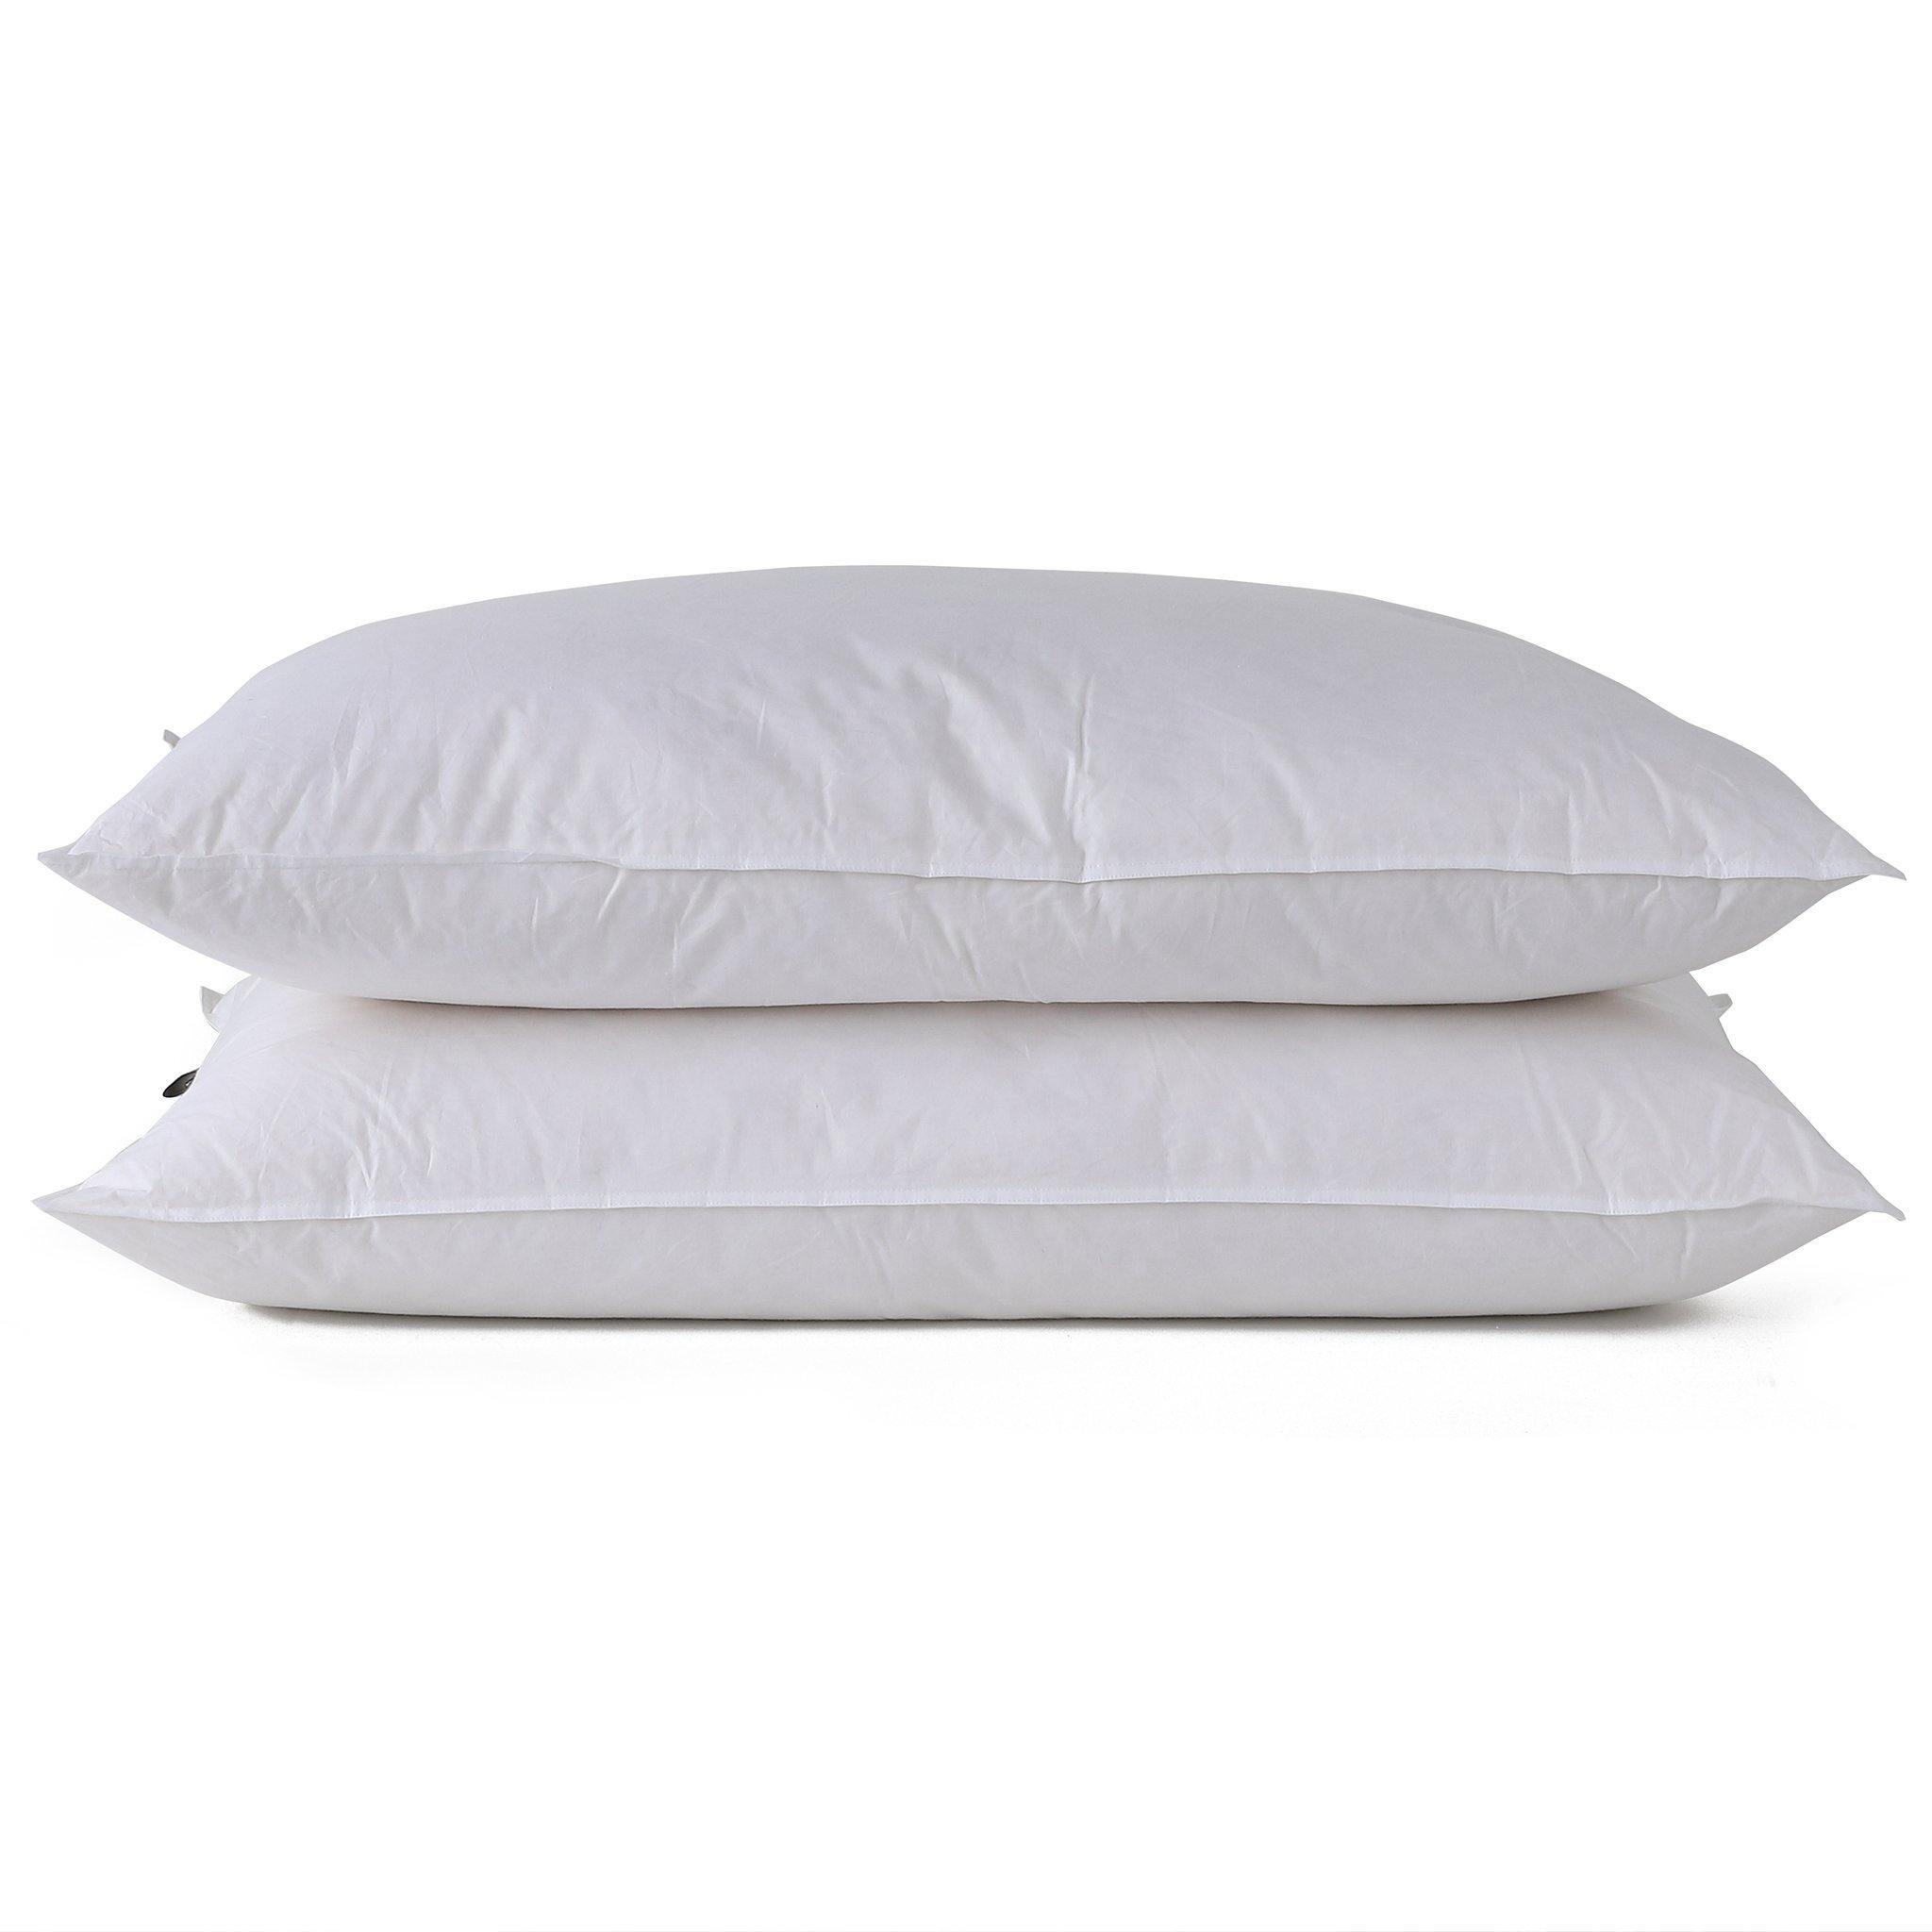 Buy 100% Natural White Goose Down Pillows Online – endlessbay